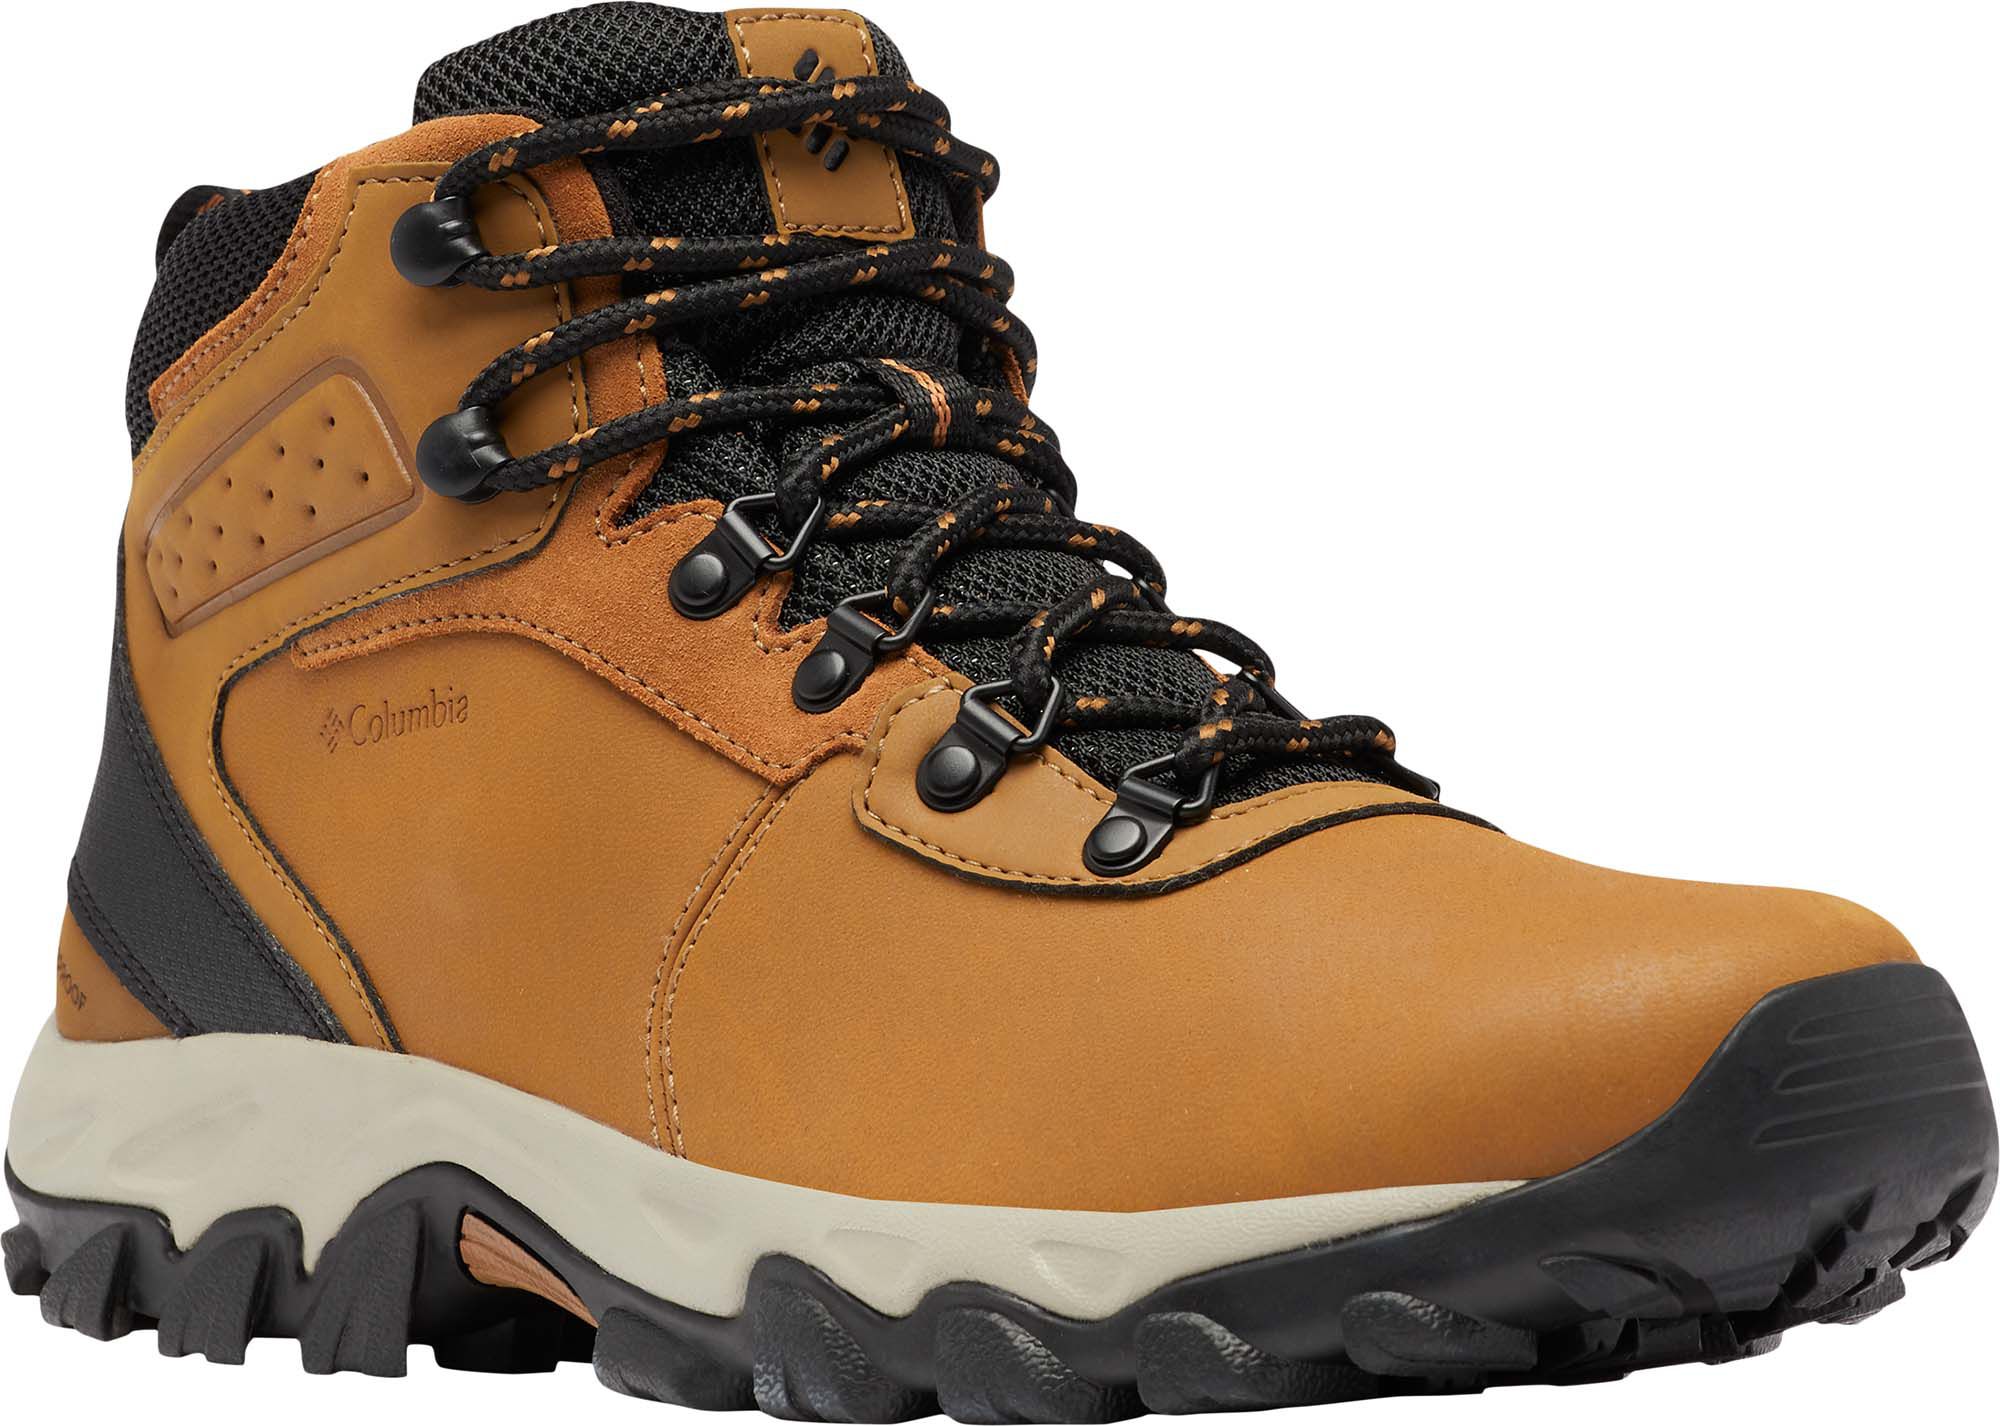 Photos - Trekking Shoes Columbia Men's Newton Ridge Plus II Waterproof Hiking Boots, Size 9, Elk/B 